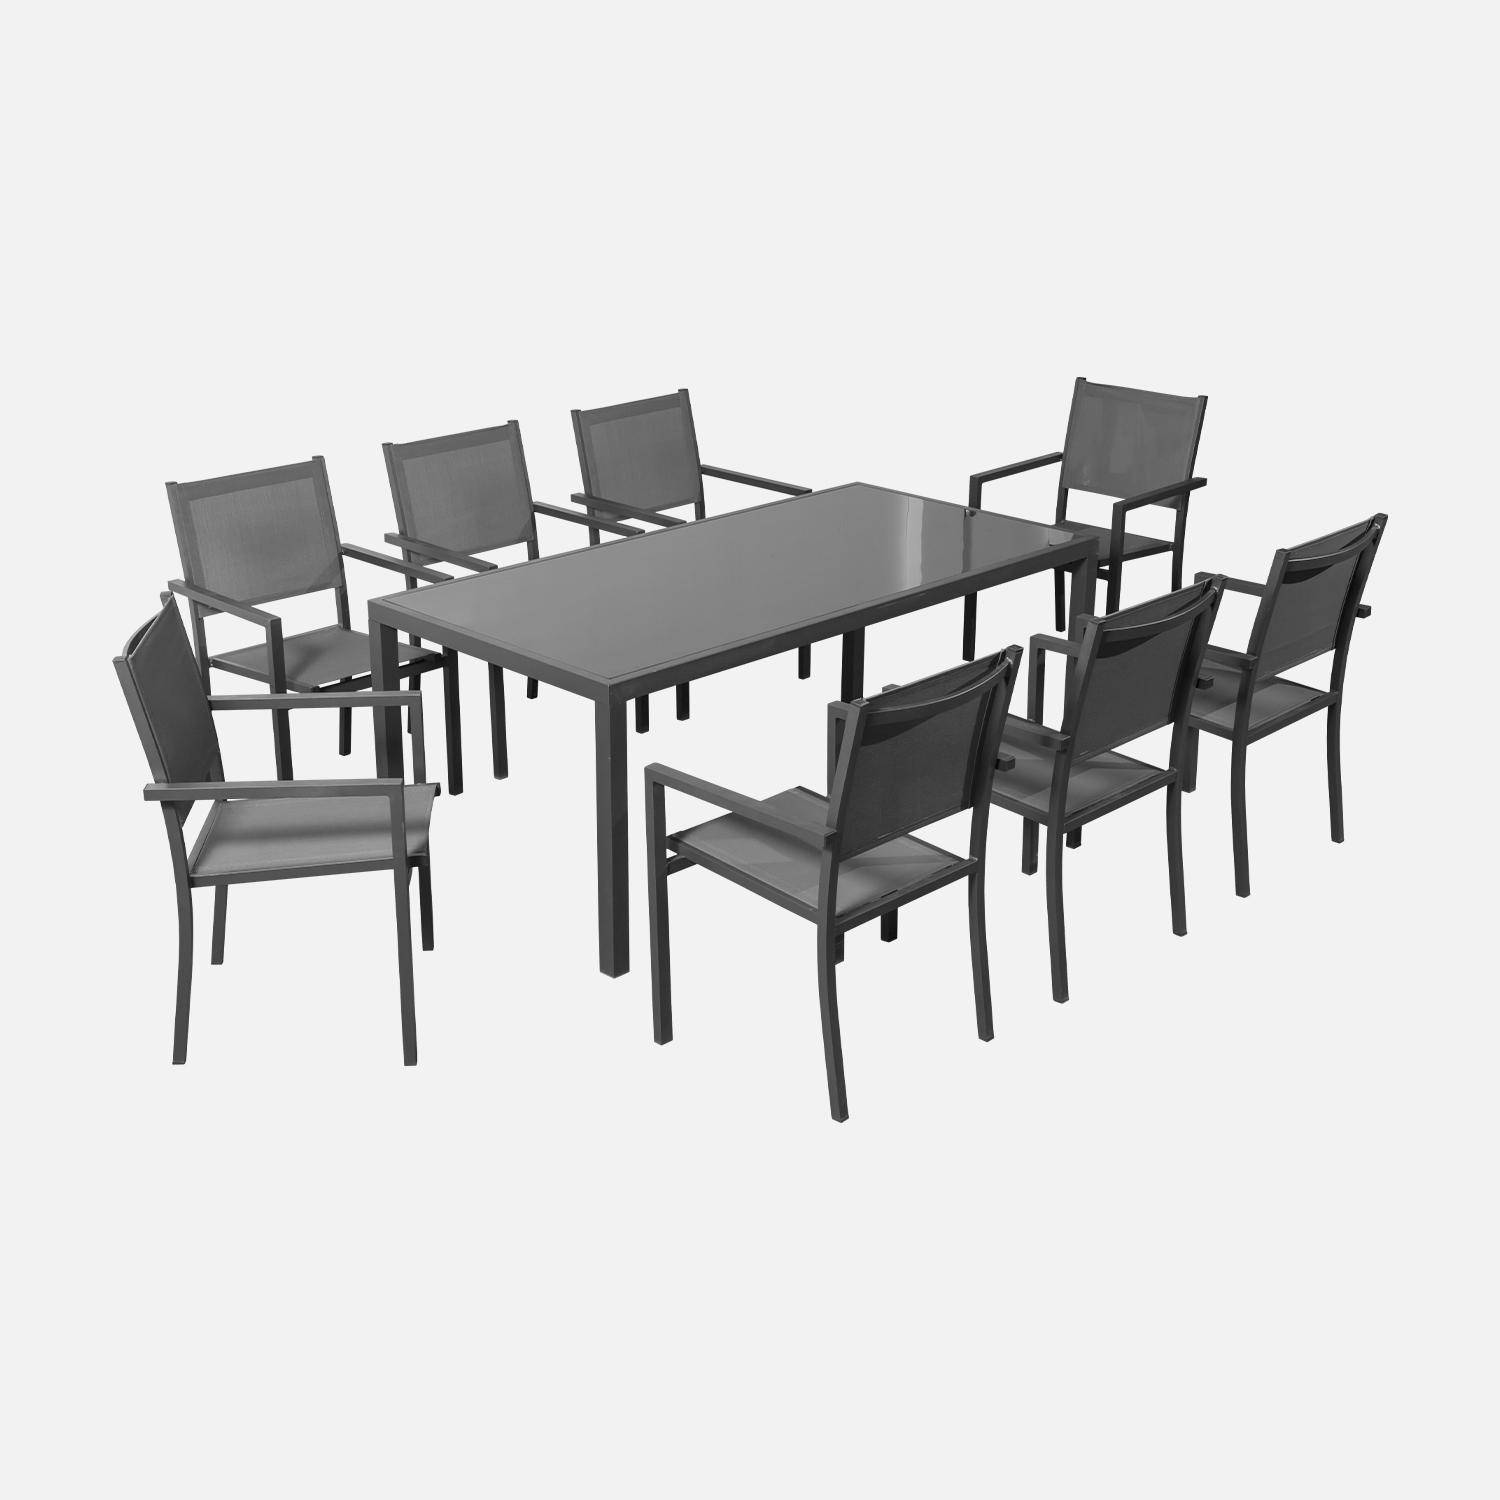 Gartengarnitur aus Aluminium und Textilene - Capua 180 cm - Anthrazit, grau - 8 Plätze - 1 großer rechteckiger Tisch, 8 stapelbare Sessel Photo2